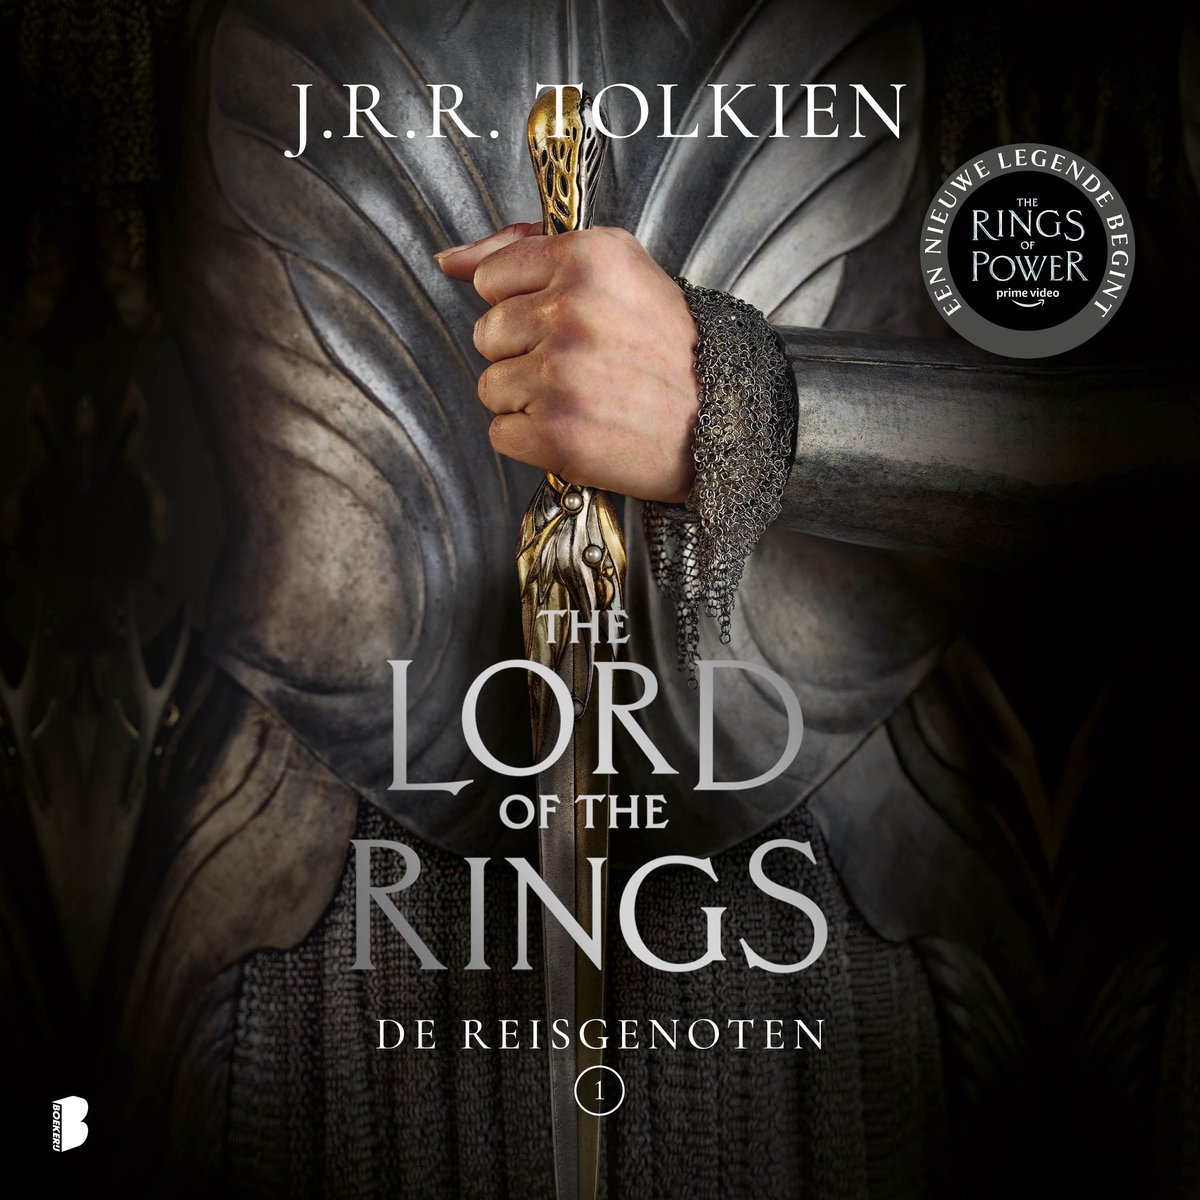 The lord of the rings - De reisgenoten, J.R.R. Tolkien | 9789052864068 |  Boeken | bol.com